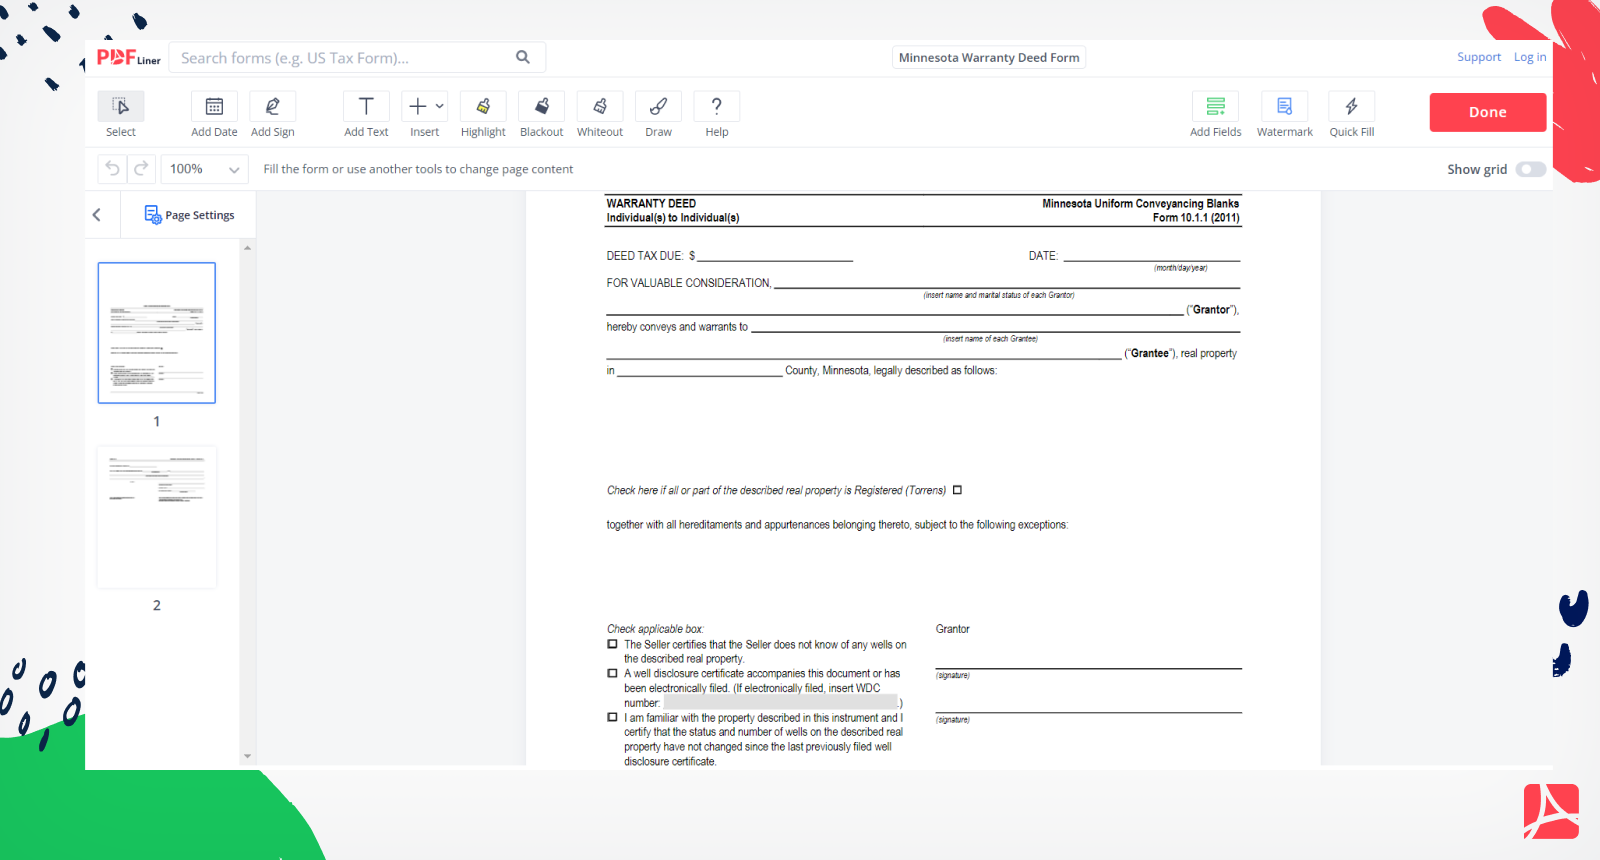 Minnesota Warranty Deed Form Screenshot